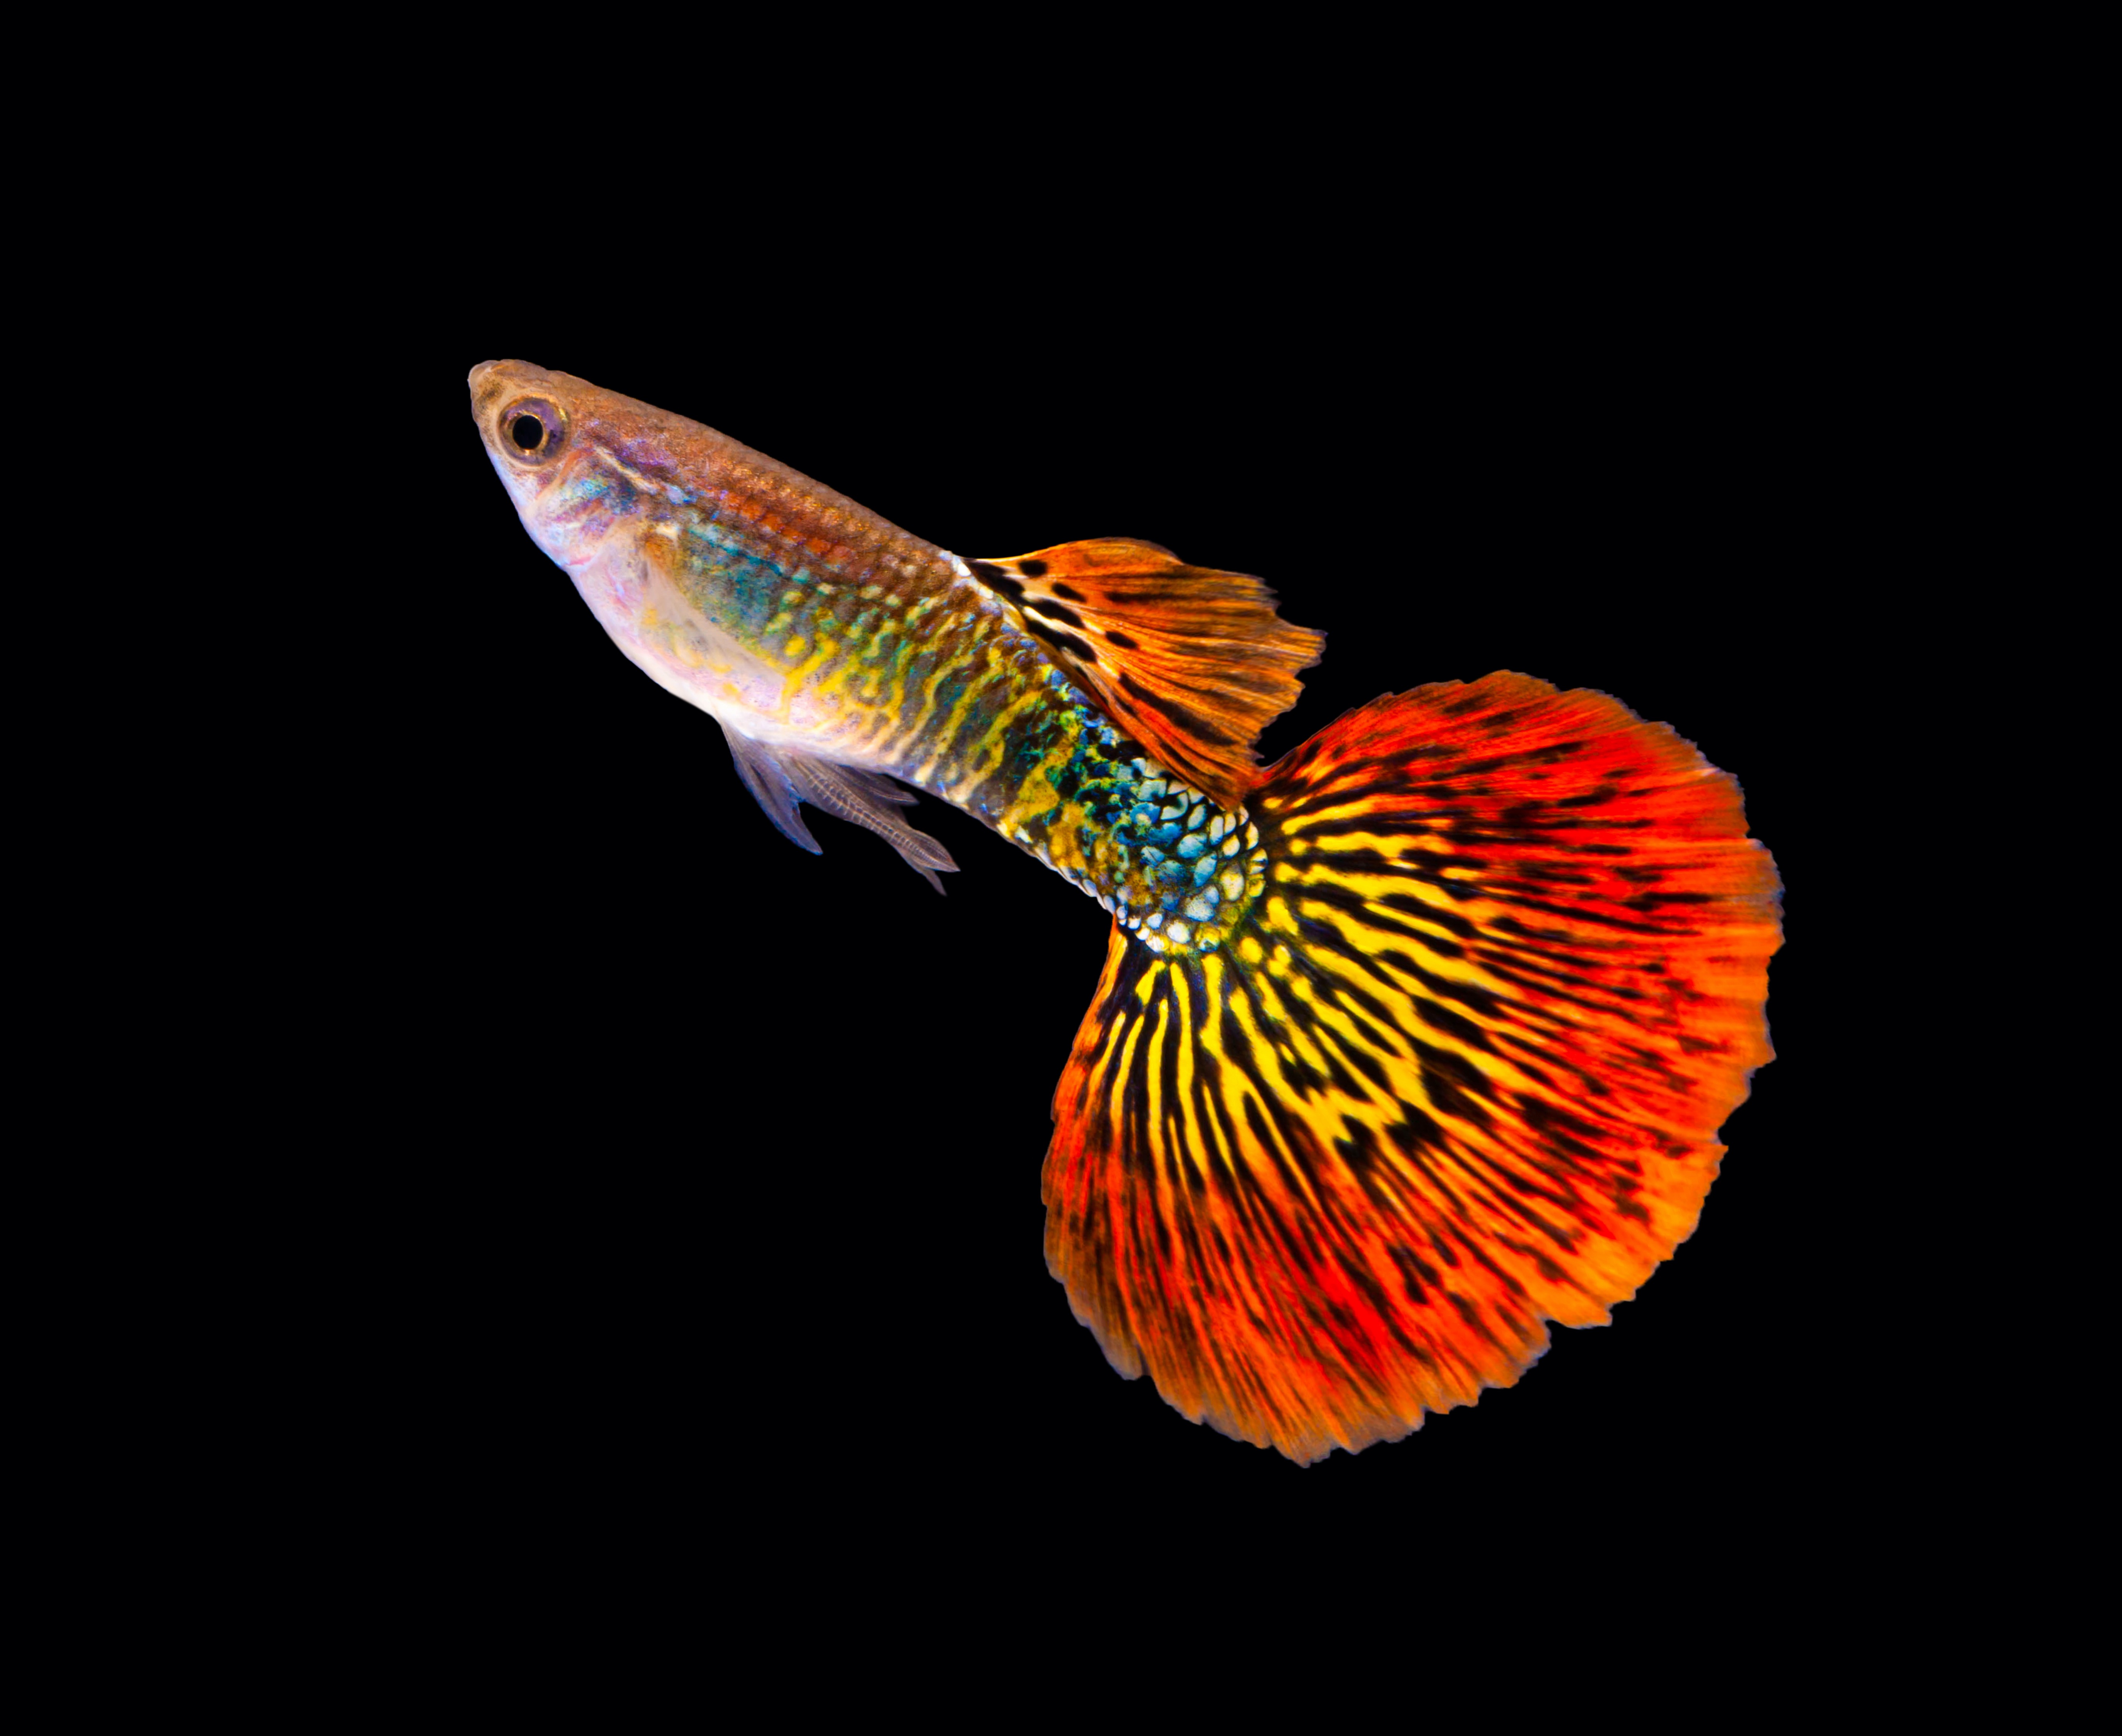 Traktat minus voldsom How to Find the Best Fish for Your Beginner Aquarium